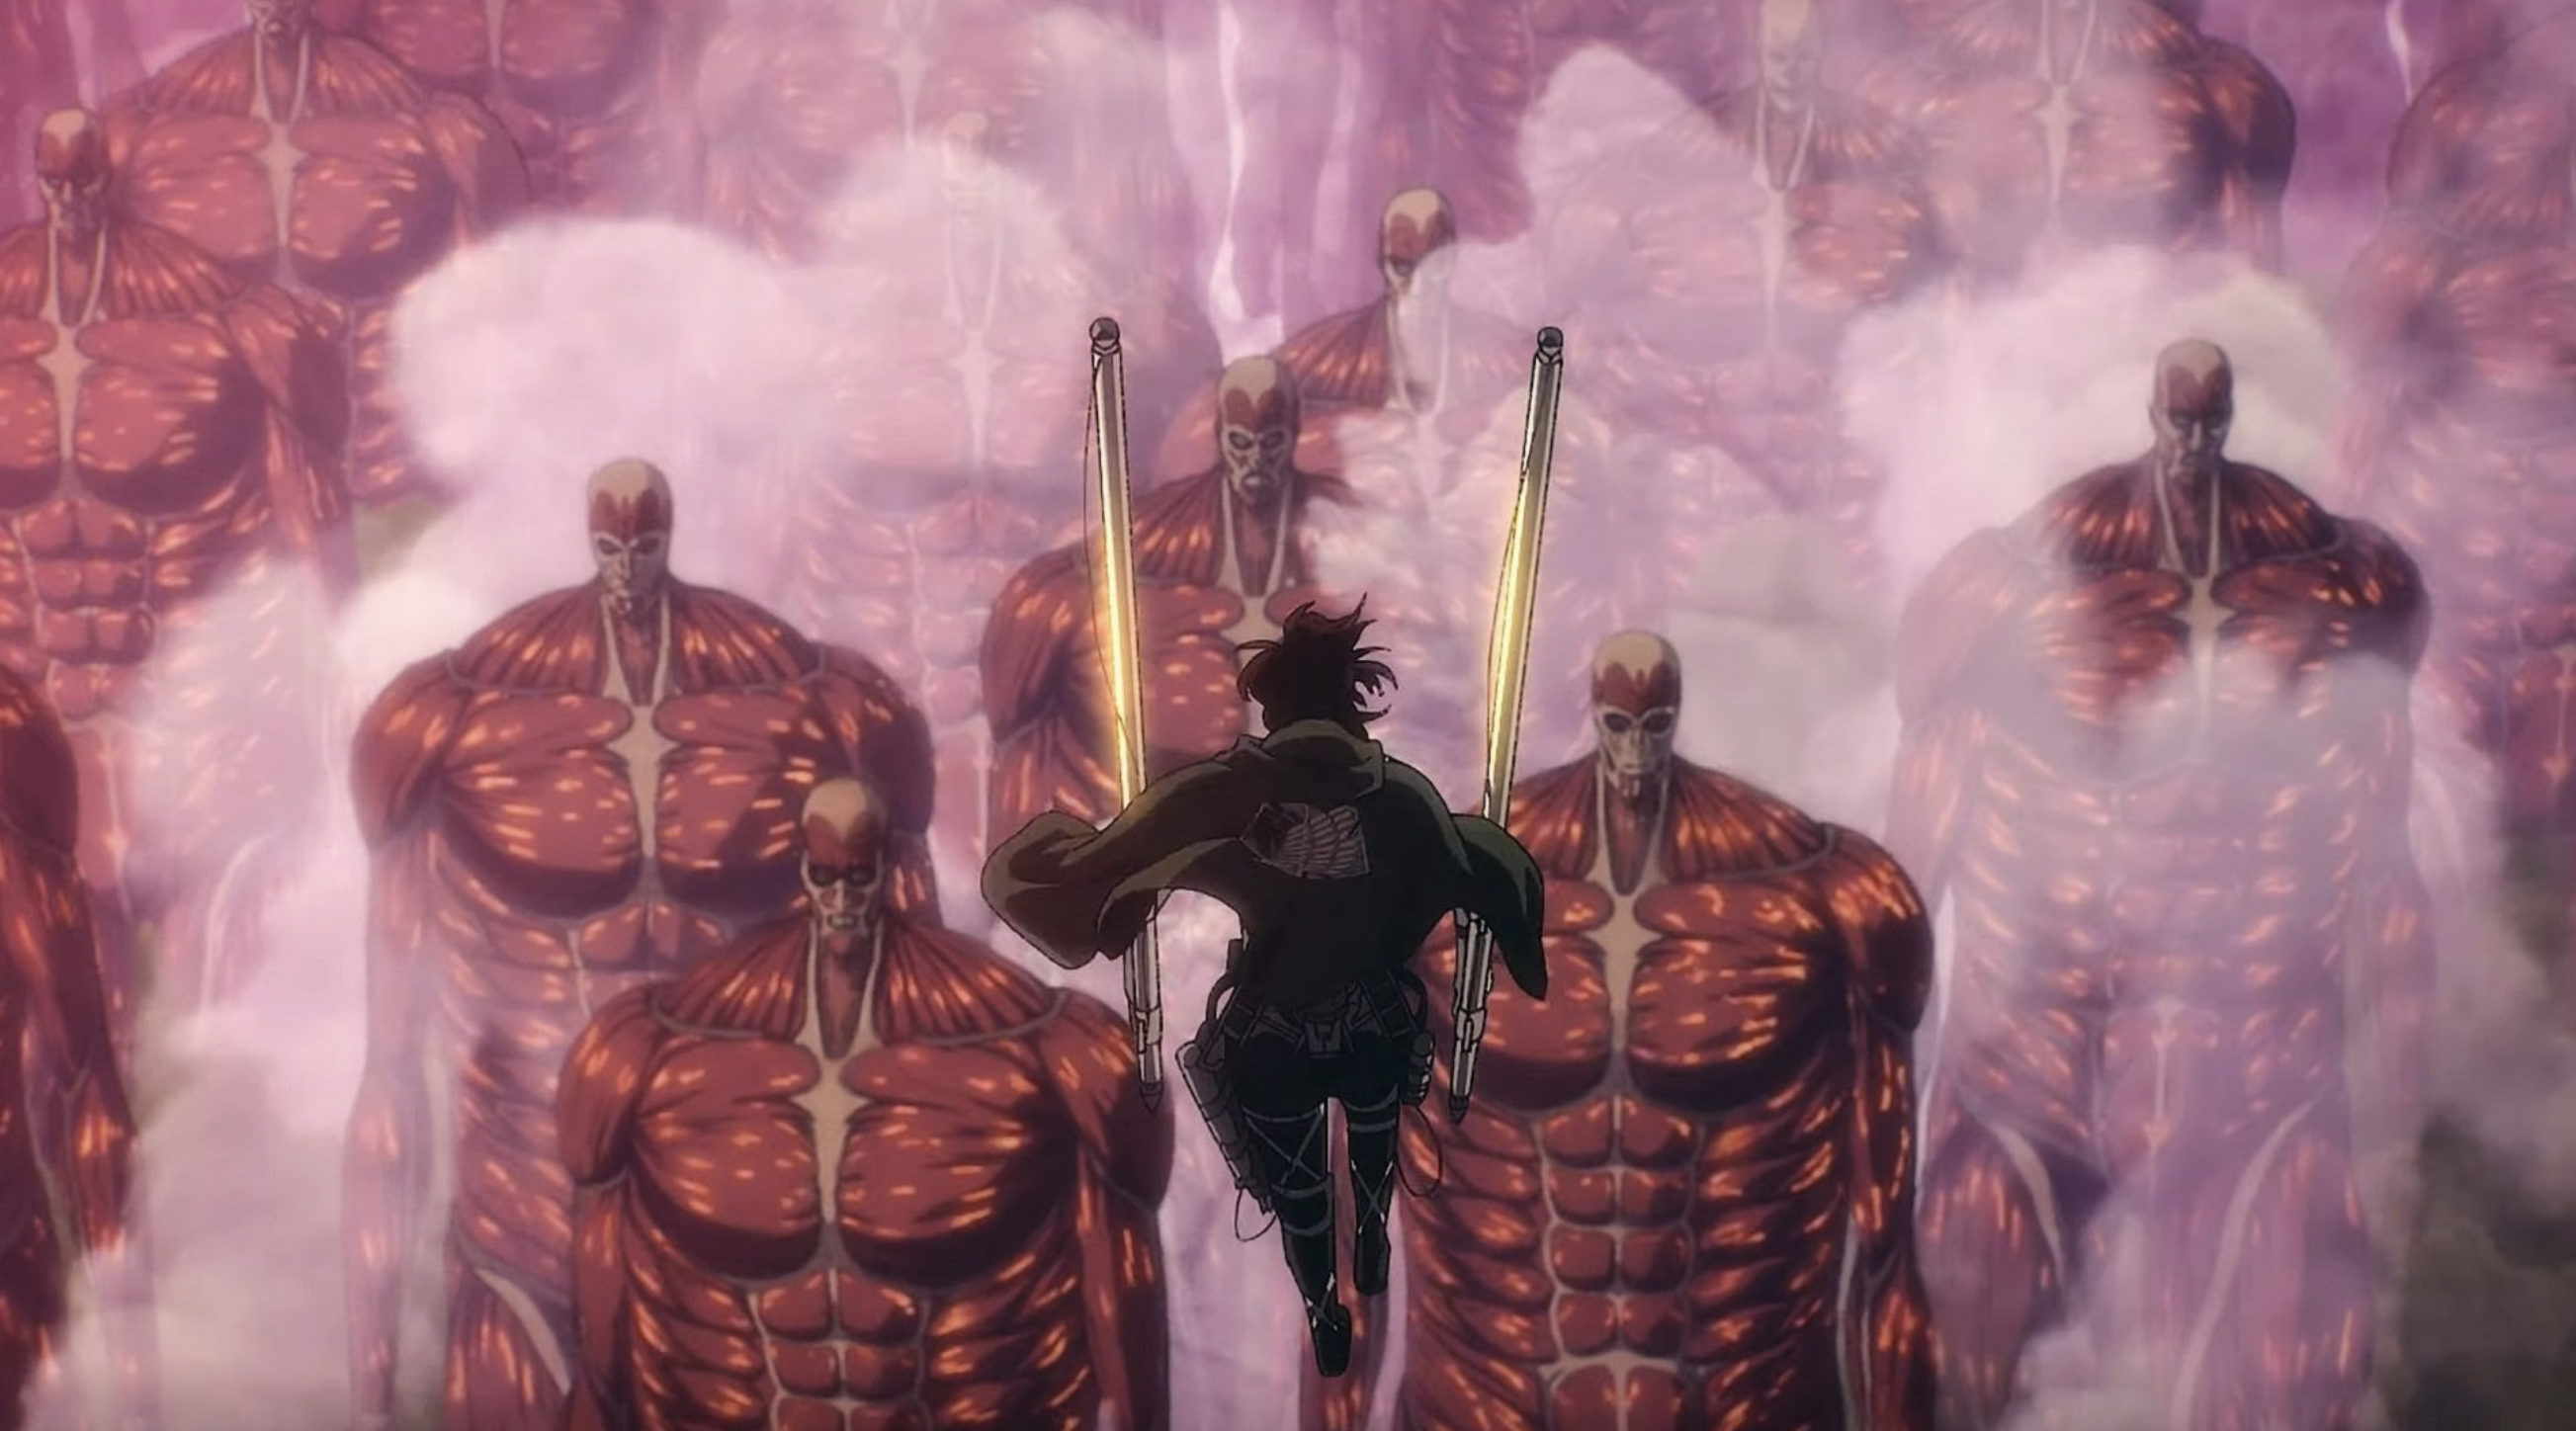 Attack on Titan / Shingeki no Kyojin – Between Monstrous and Human